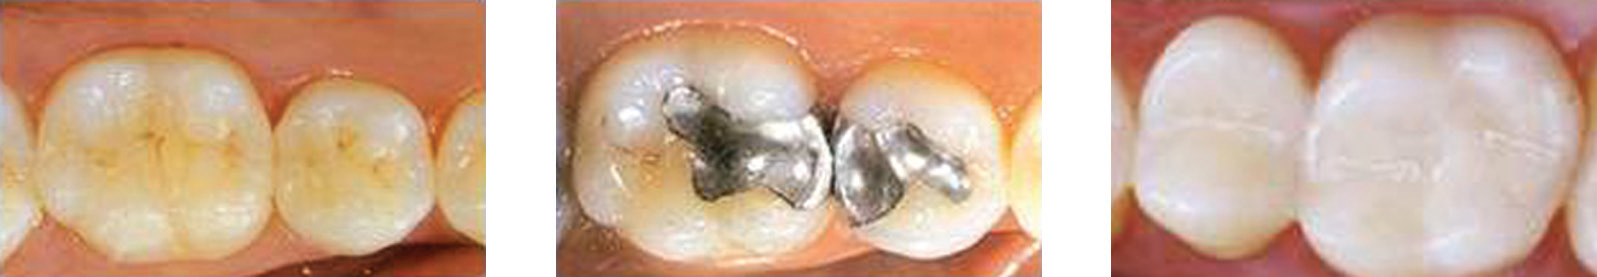 Restorative dentistry examples, showing (a) ceramic inlays; (b) amalgam restoration; (c) composite fillings.